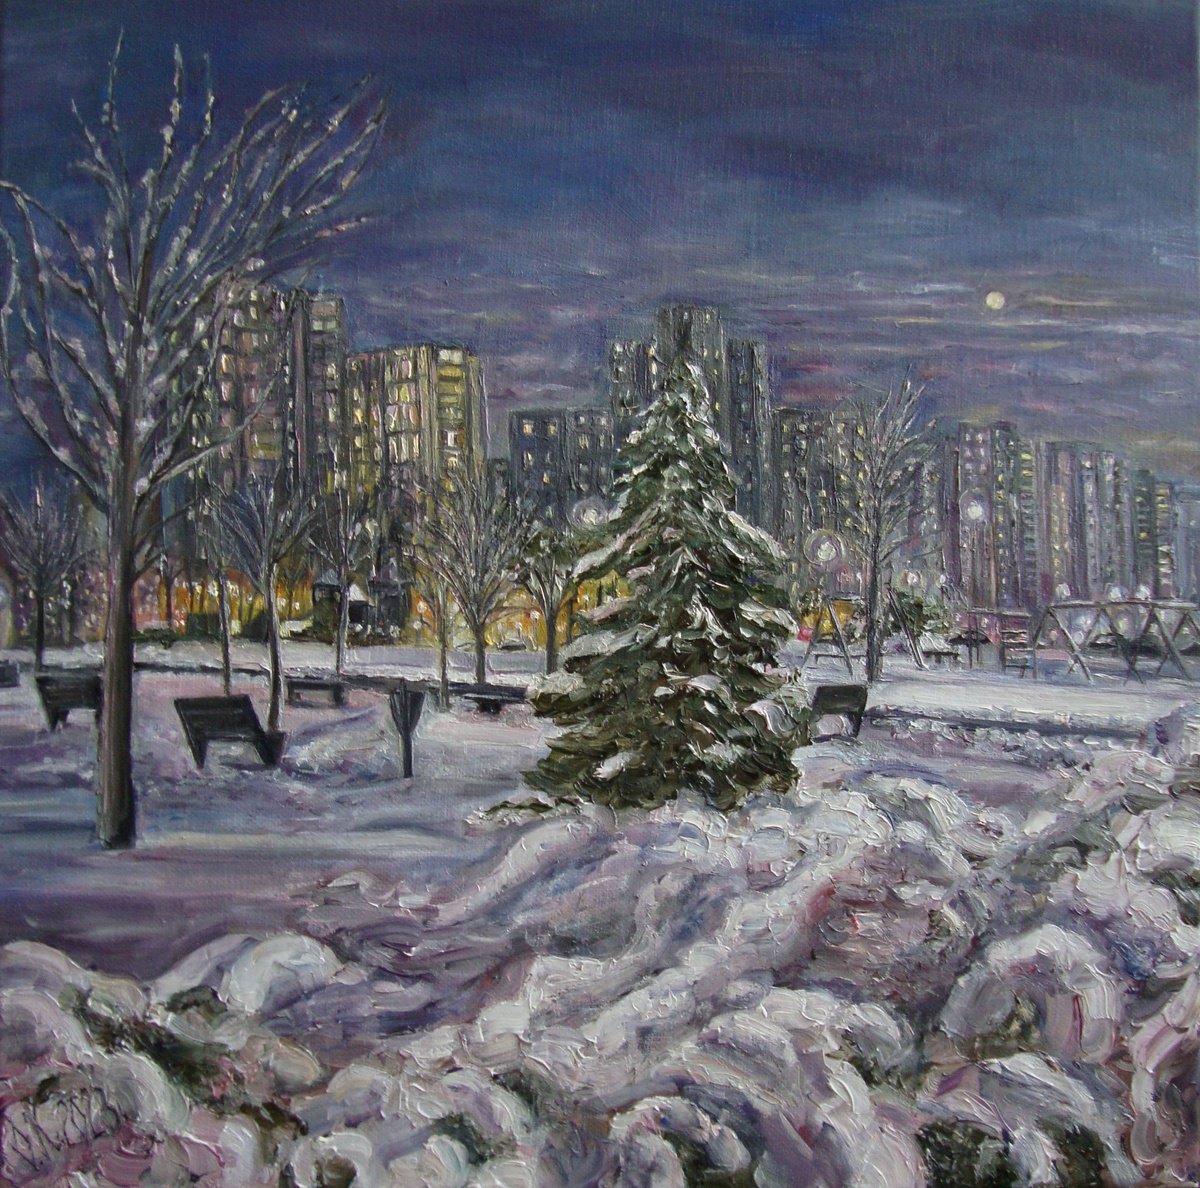 Winter fairytale by Olga Knezevic